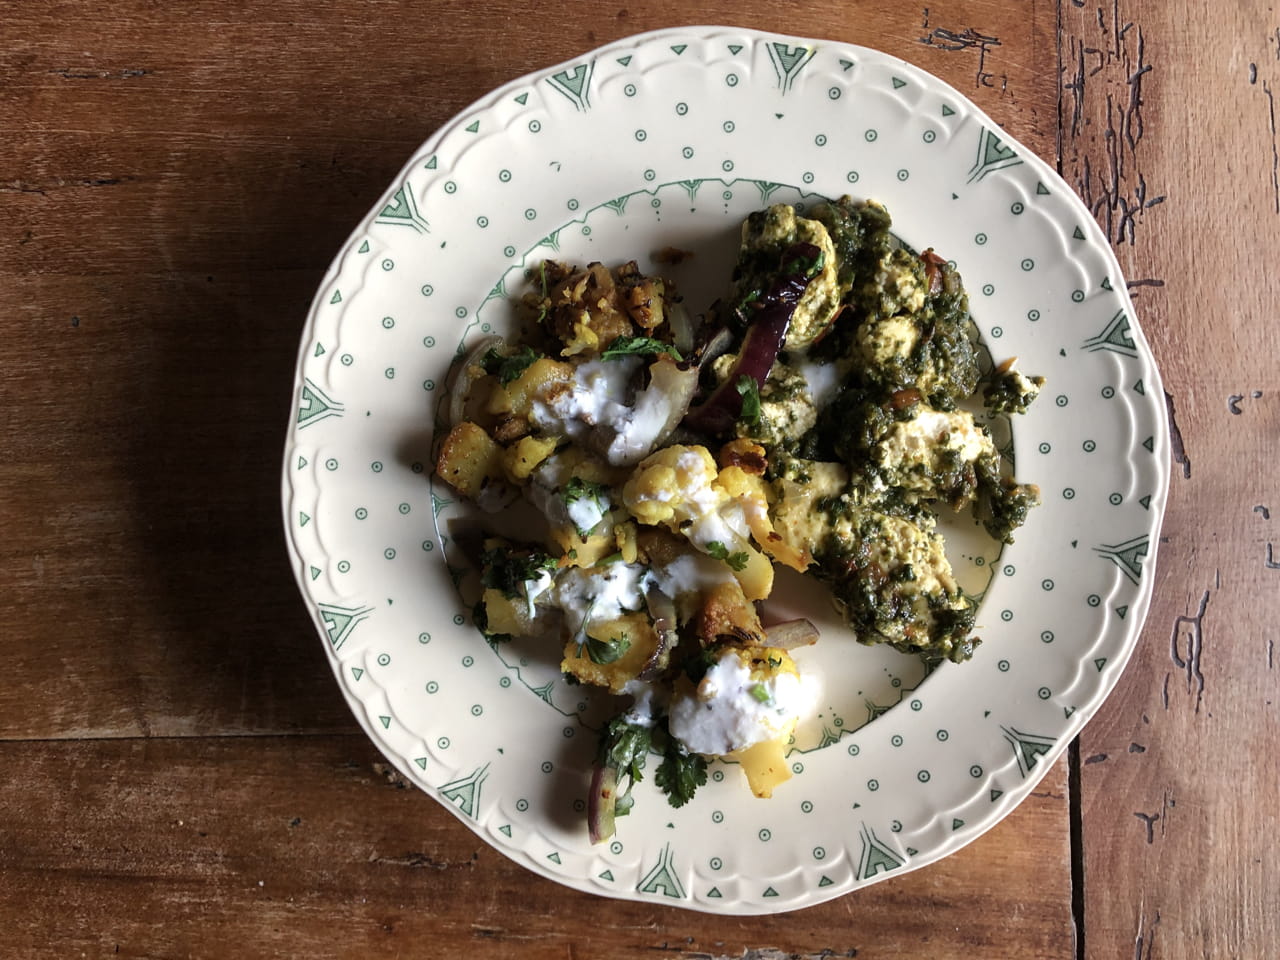  Indian veggie food and sauvignon blanc